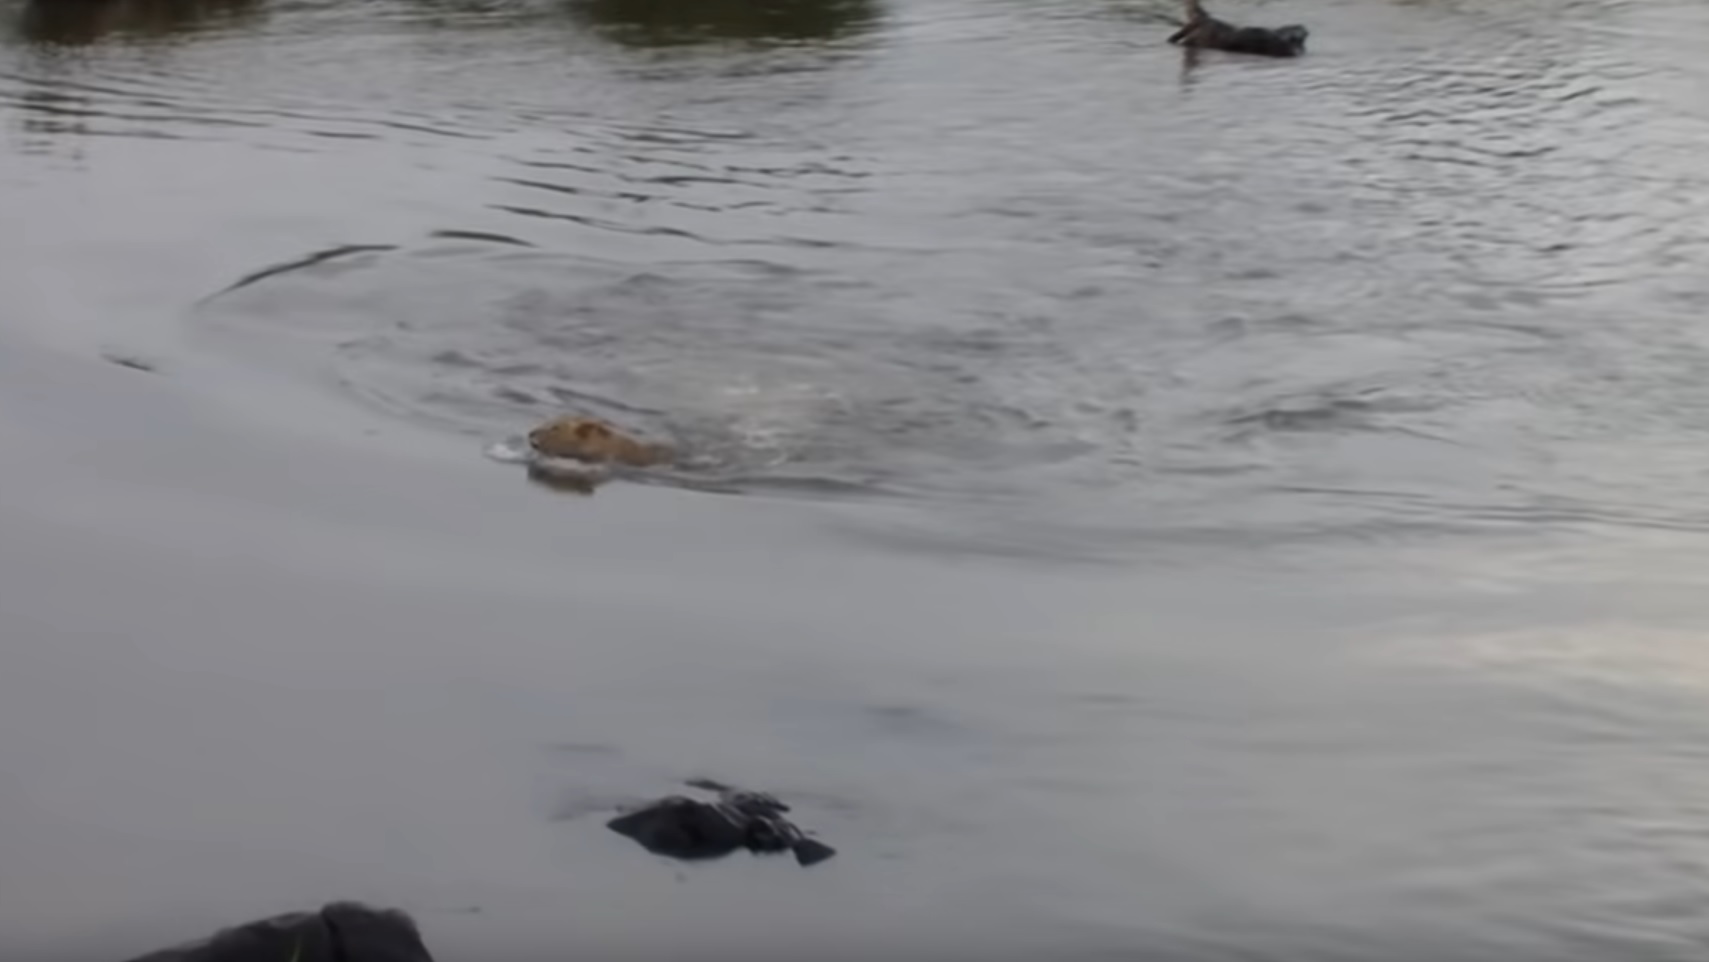 Lion Meets Crocodile While Swimming